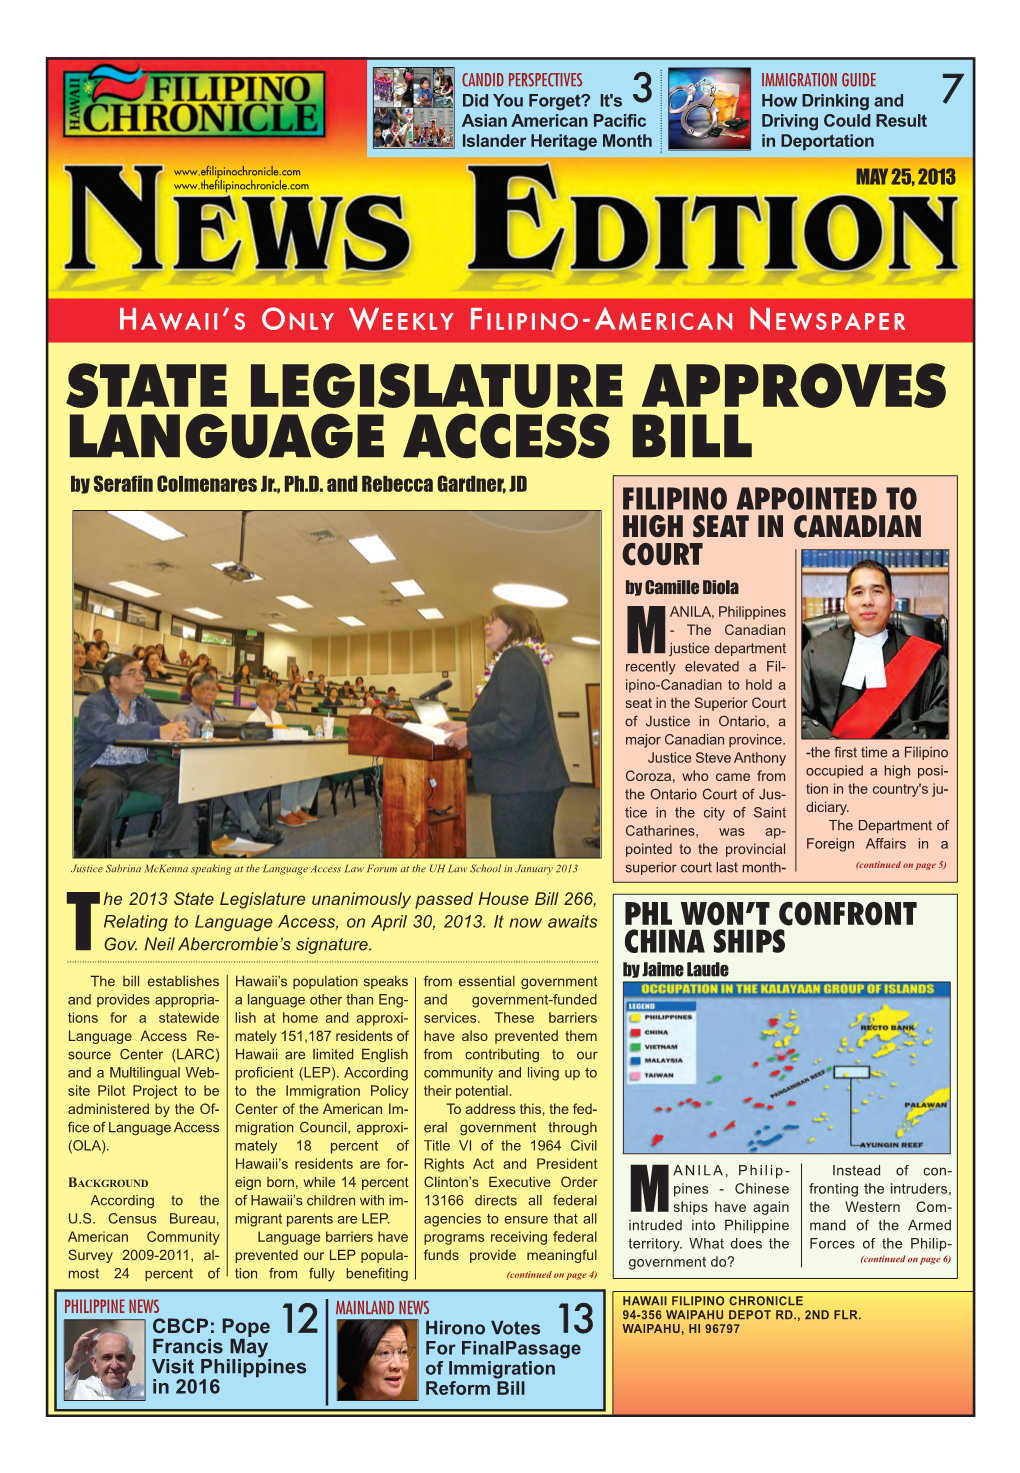 State Legislature Approves Language Access Bill by Serafin Colmenares Jr., Ph.D